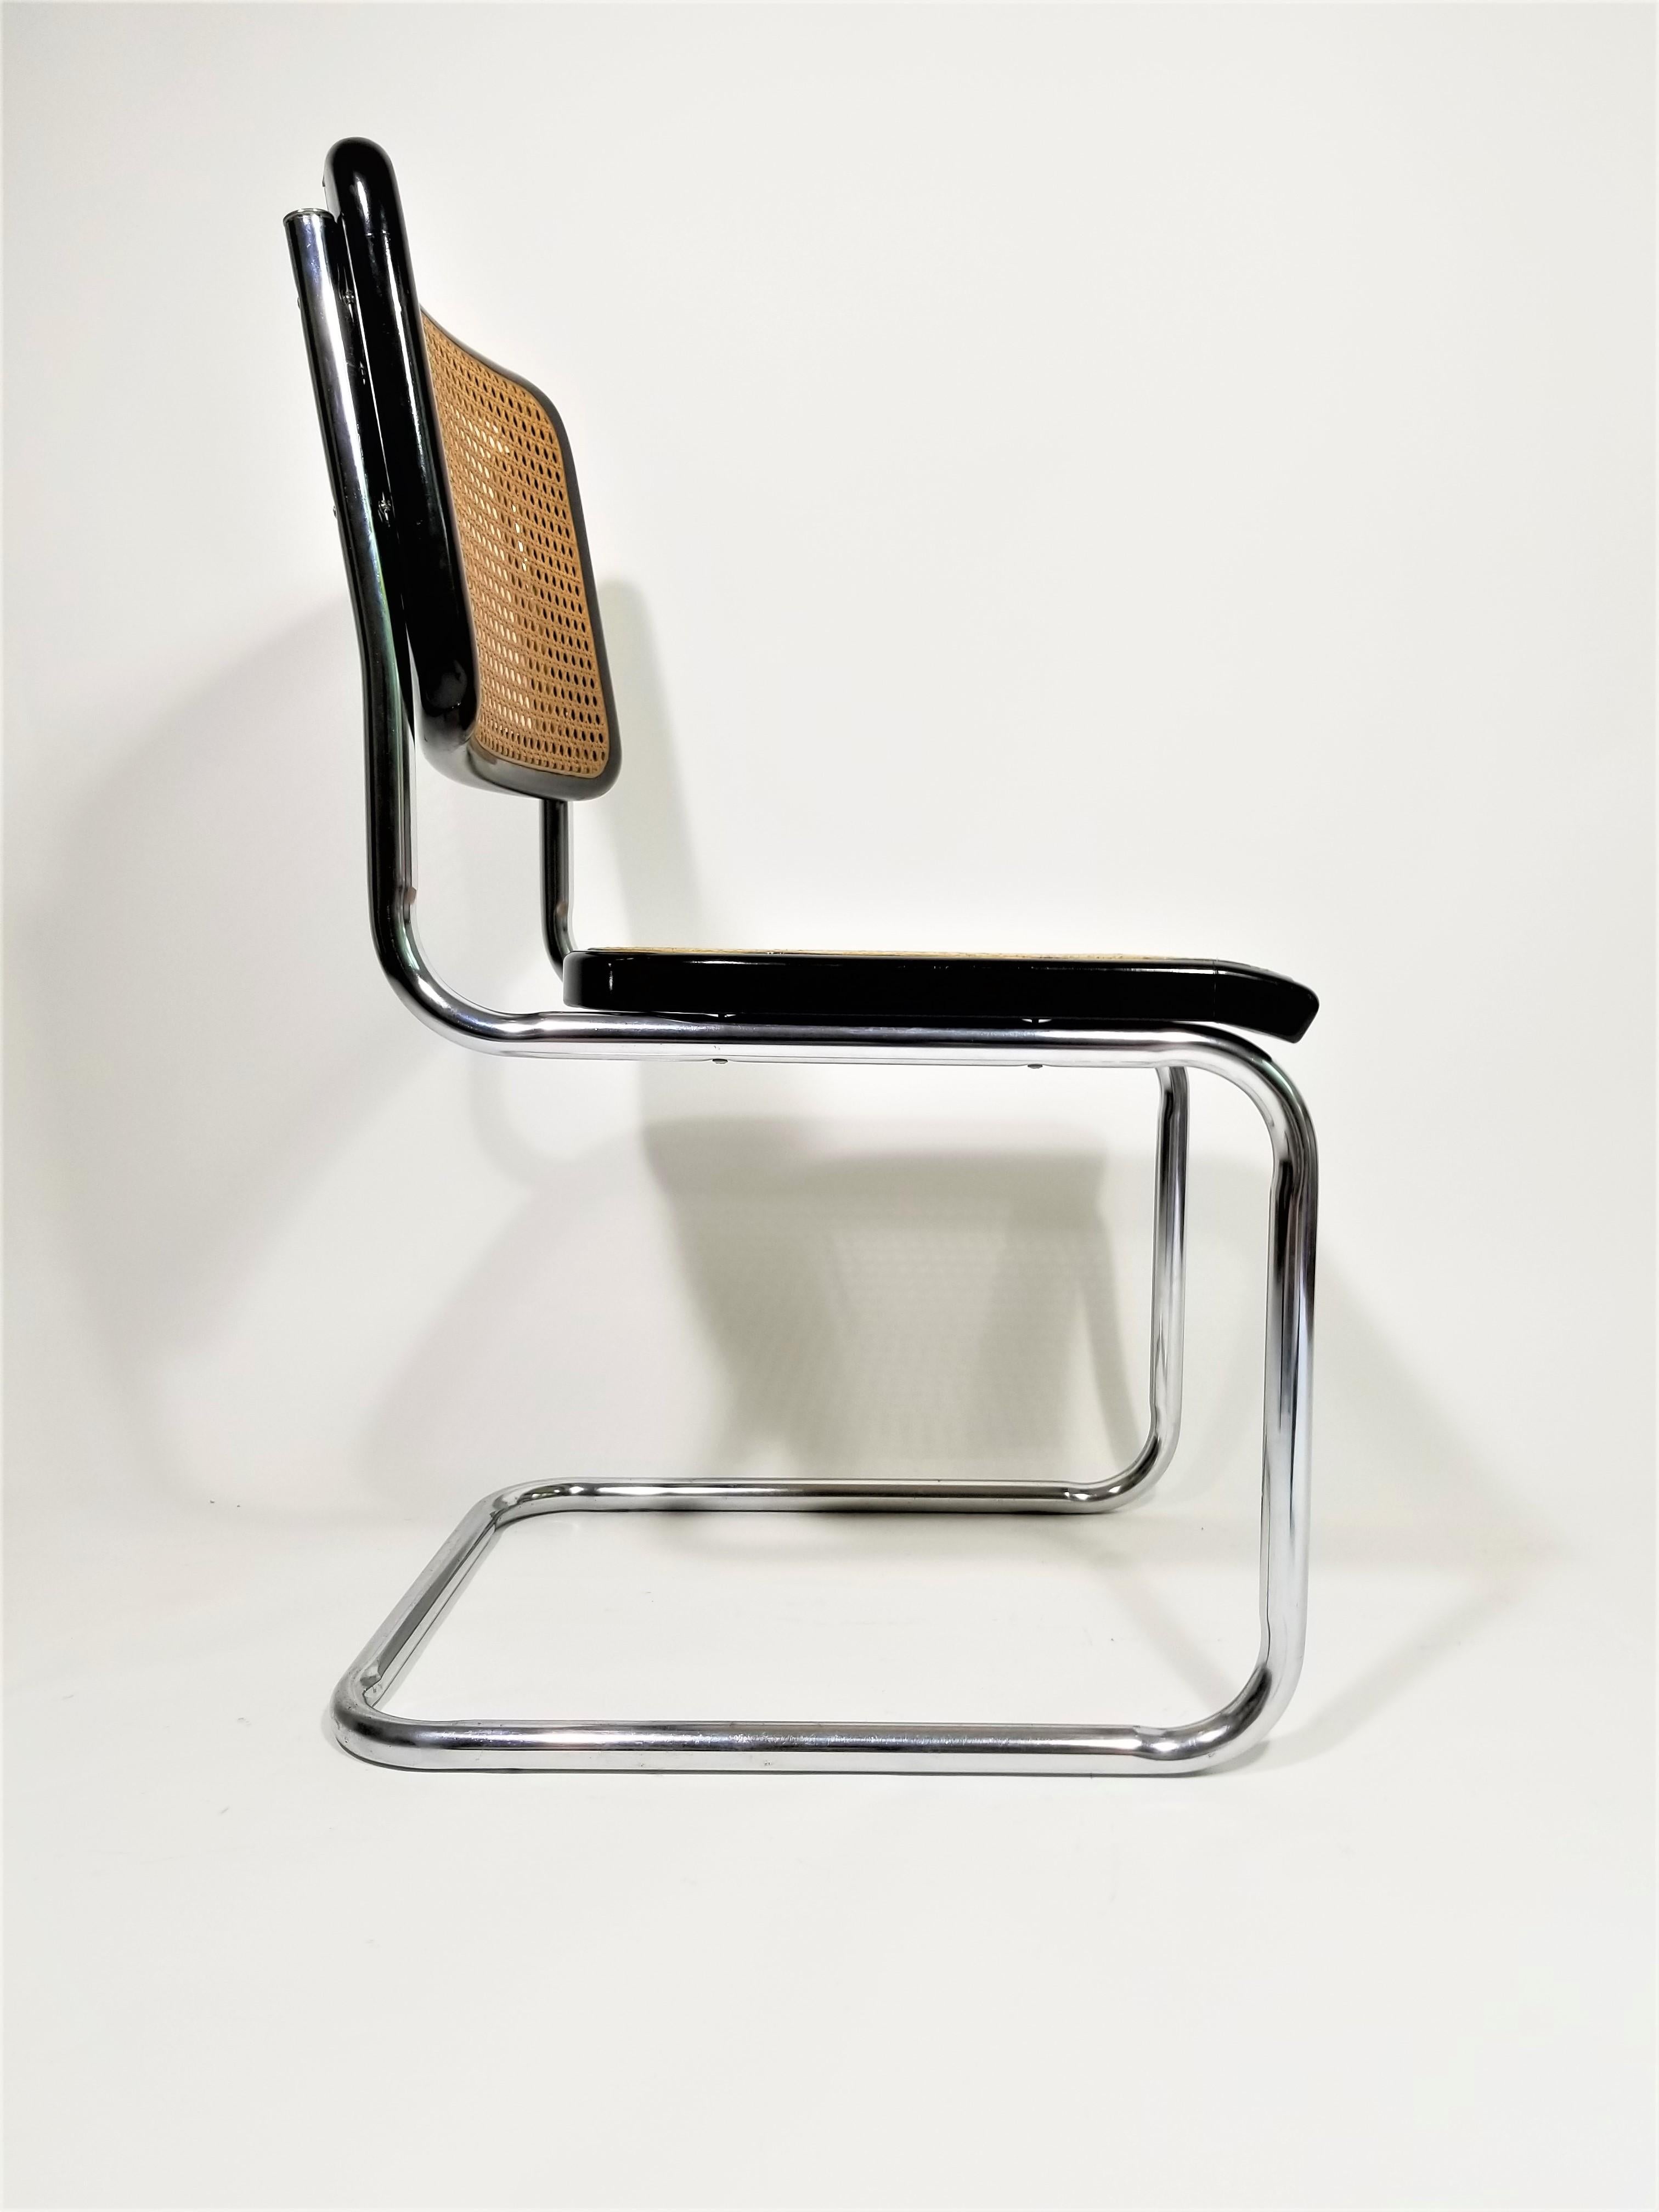 Thonet Marcel Breuer Cesca Black Side Chair Midcentury, New York 1